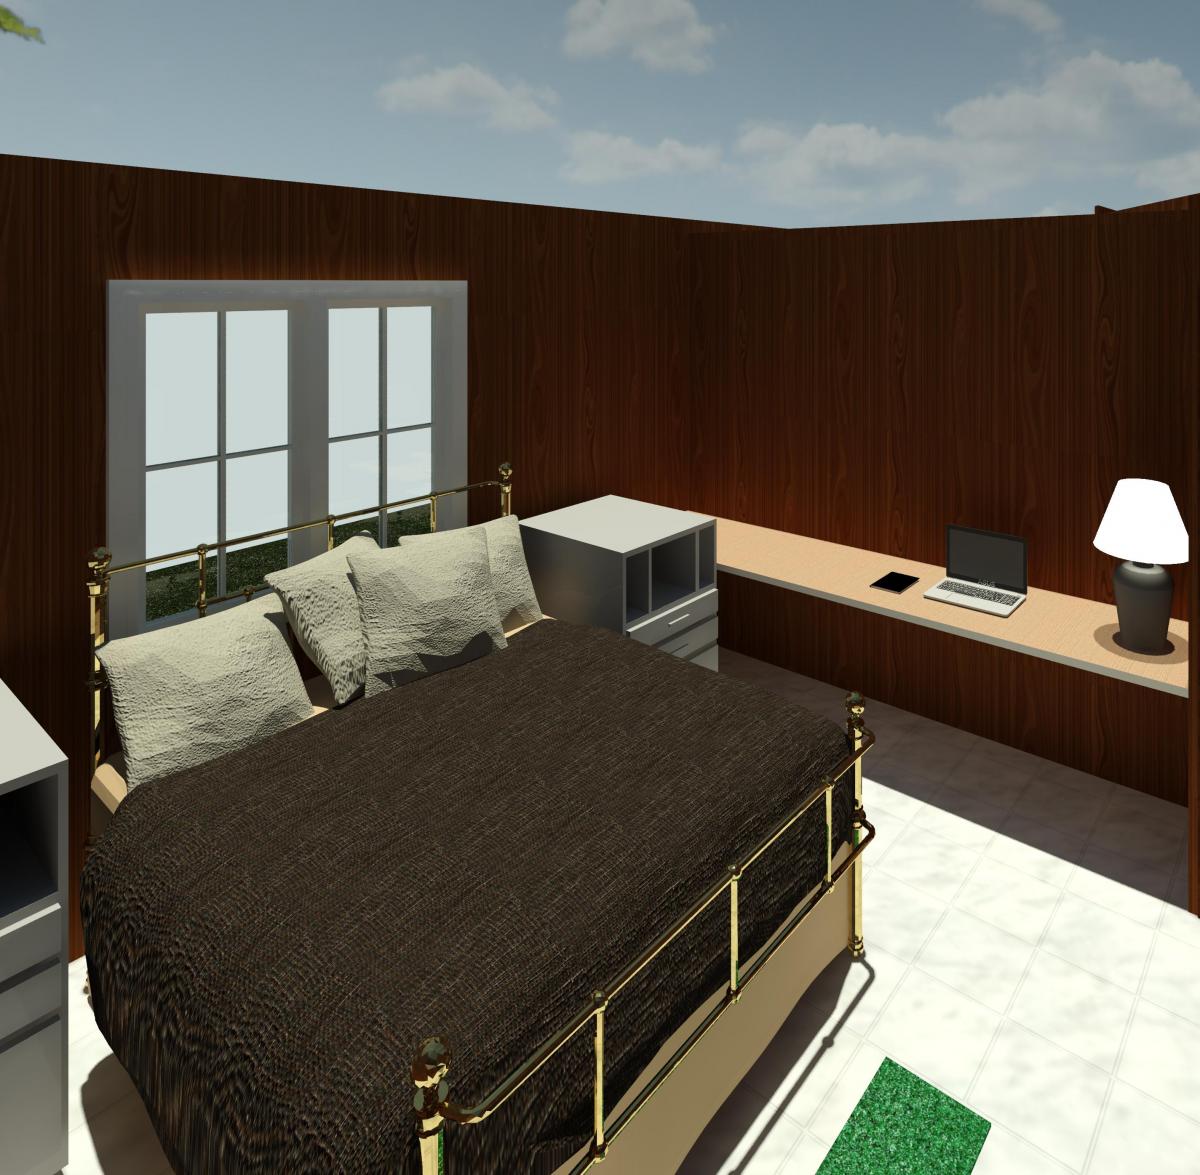 Bed room